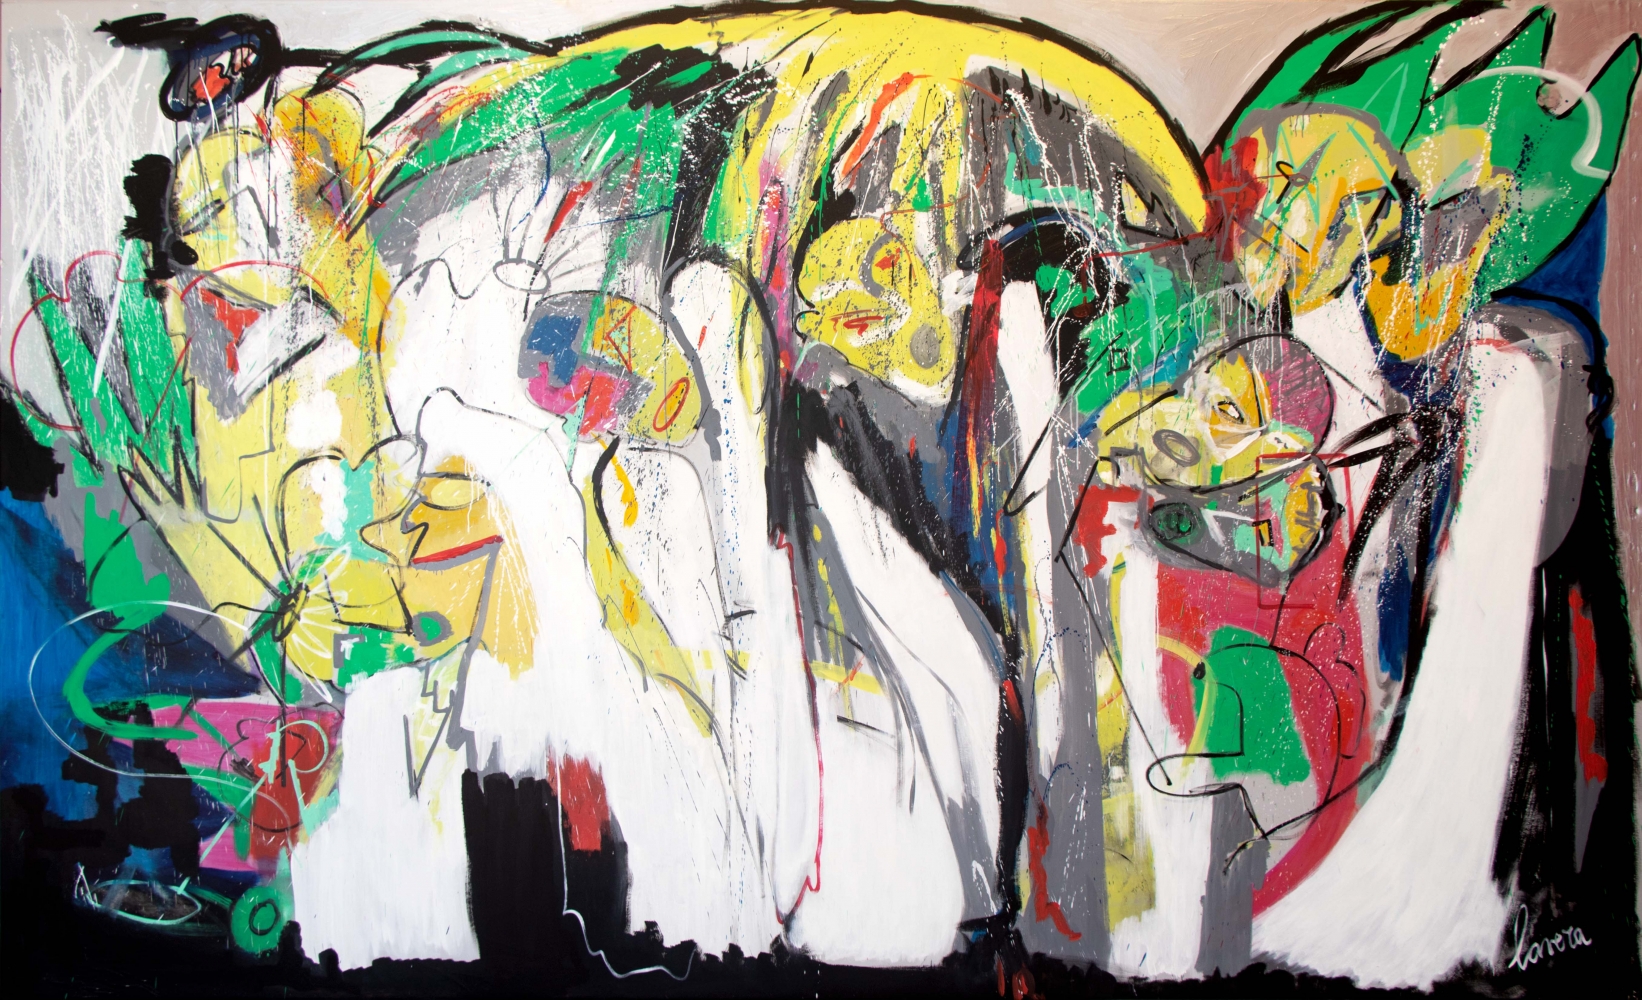 Fernanda Lavera, Sociologia Reversa, 2015, Acrylic on canvas, 78 x 130 inches, graffiti and street art for sale